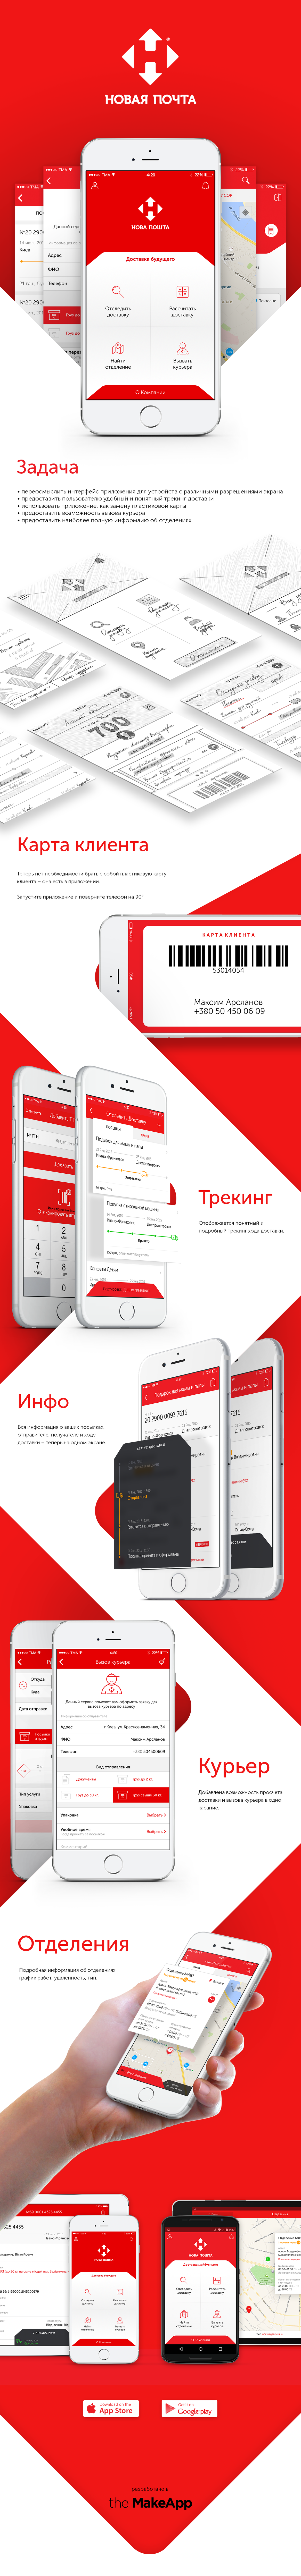 ios android app delivery новая почта нова пошта доставка  приложение интерфейс ux UI слава украине